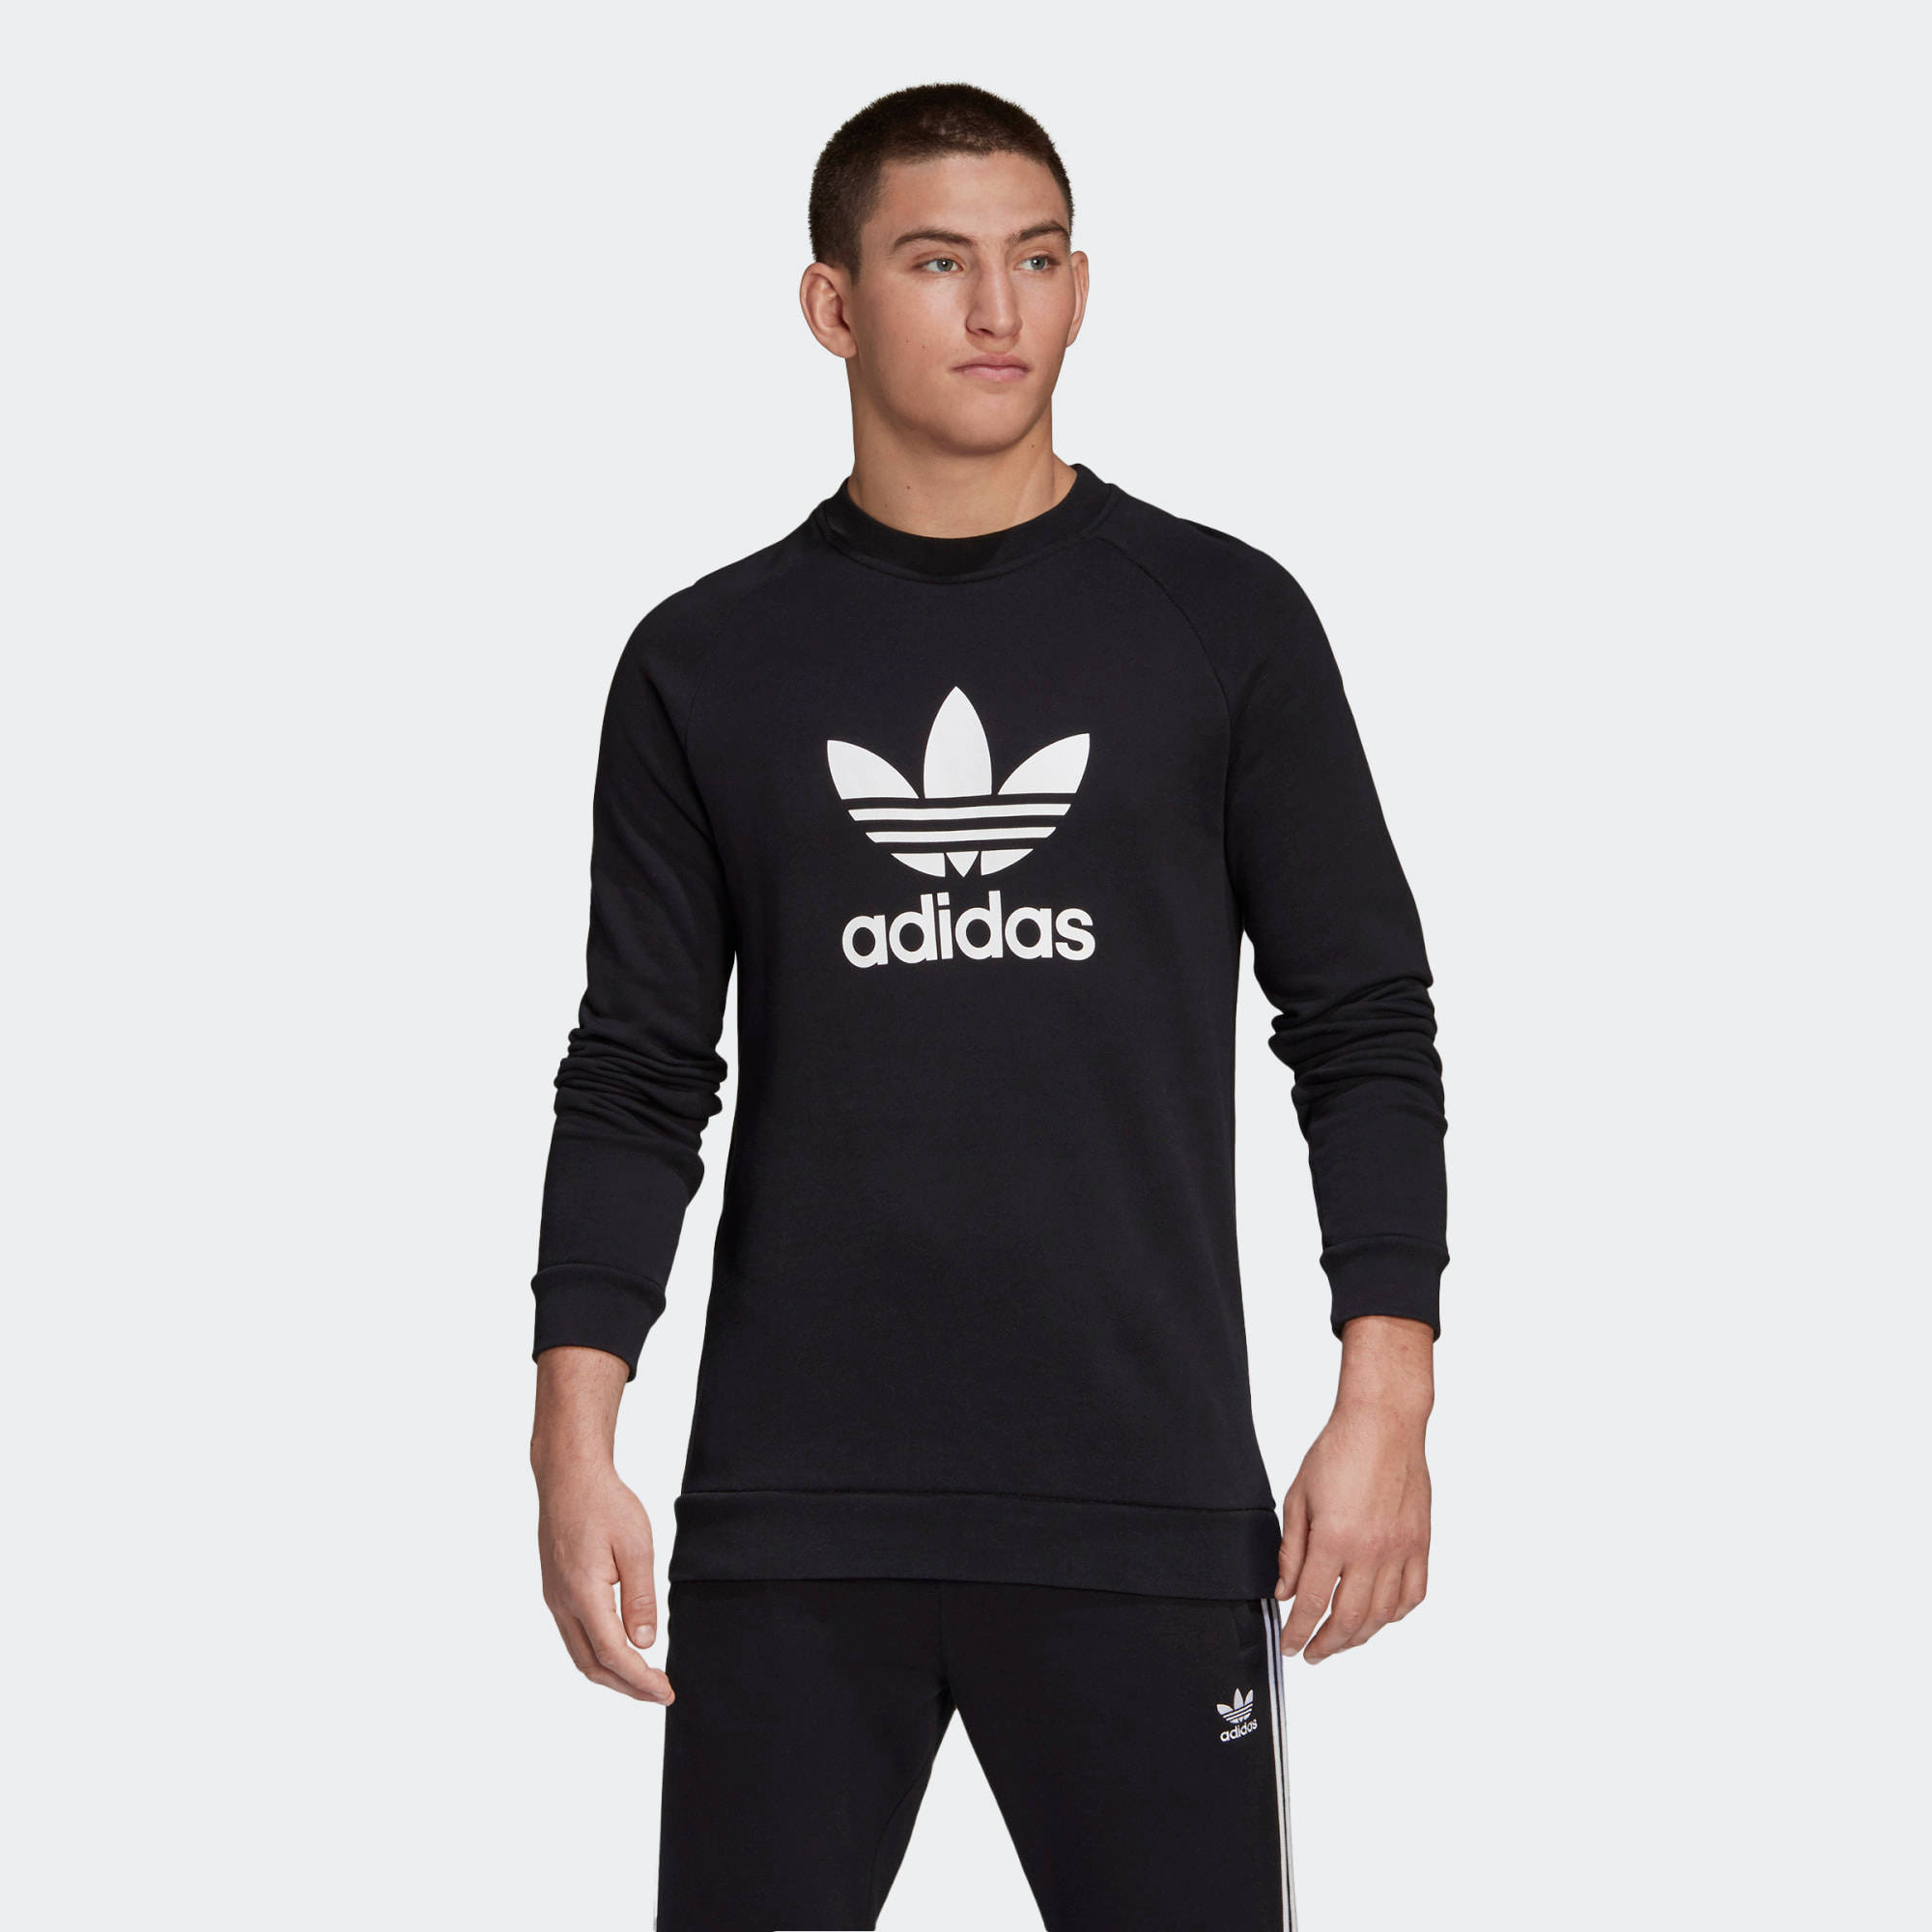 adidas Trefoil Warm-up Crew Sweatshirt - Black | The Sole Supplier